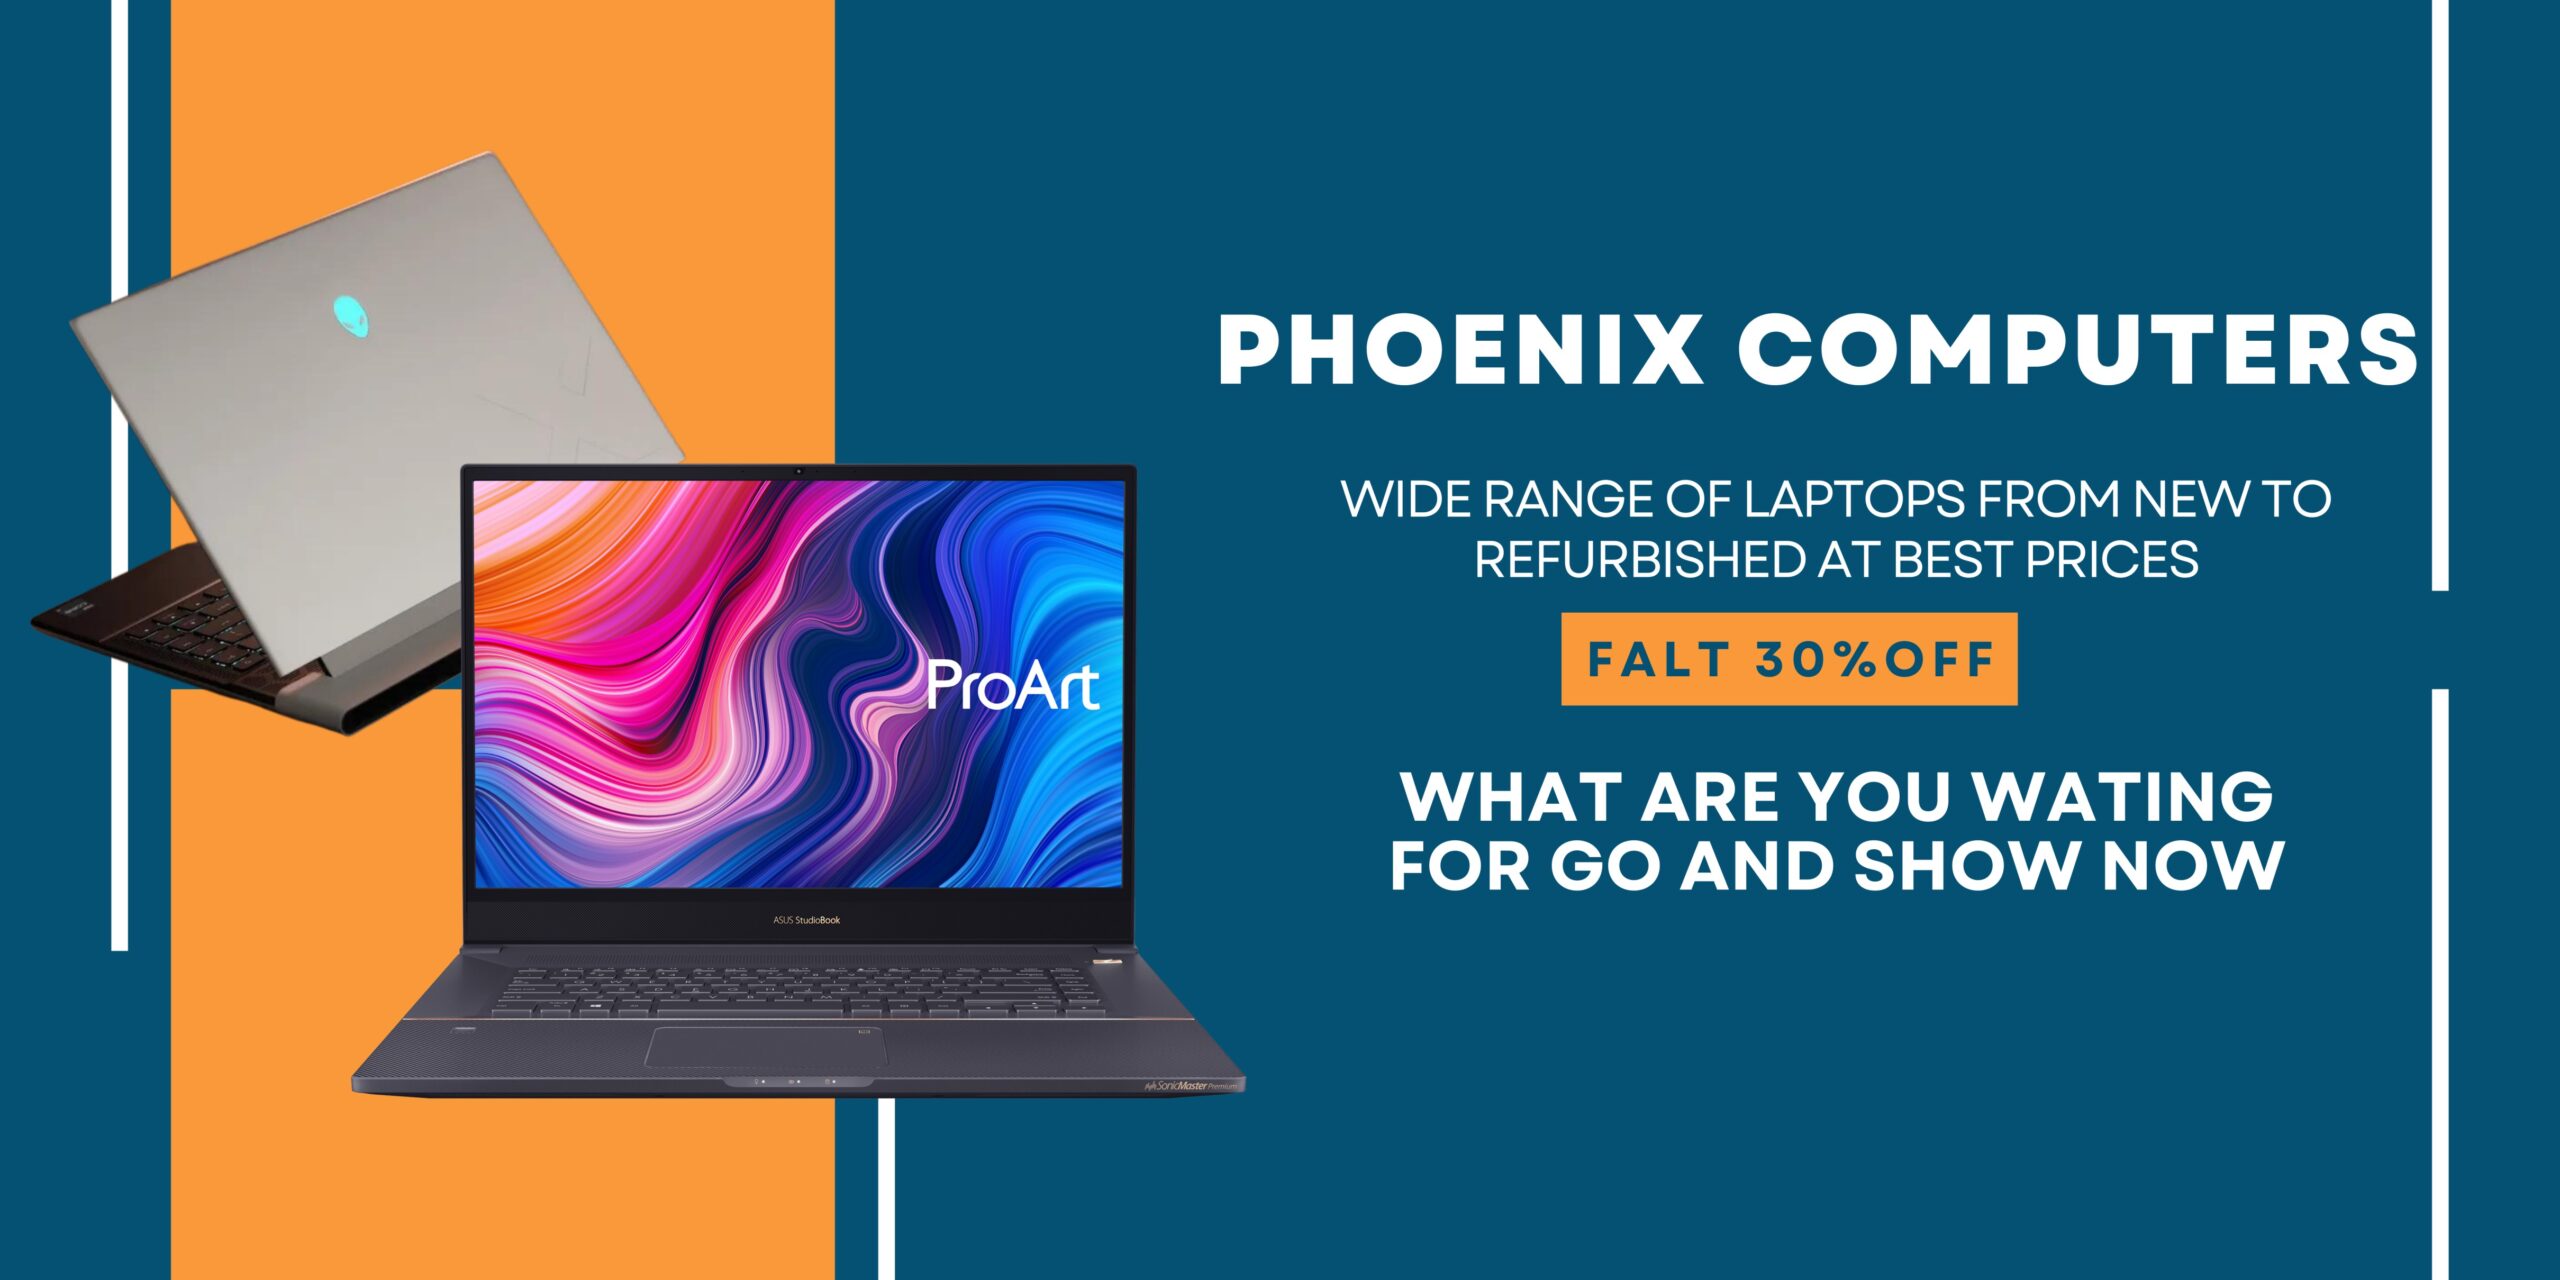 phoenix computers (1)